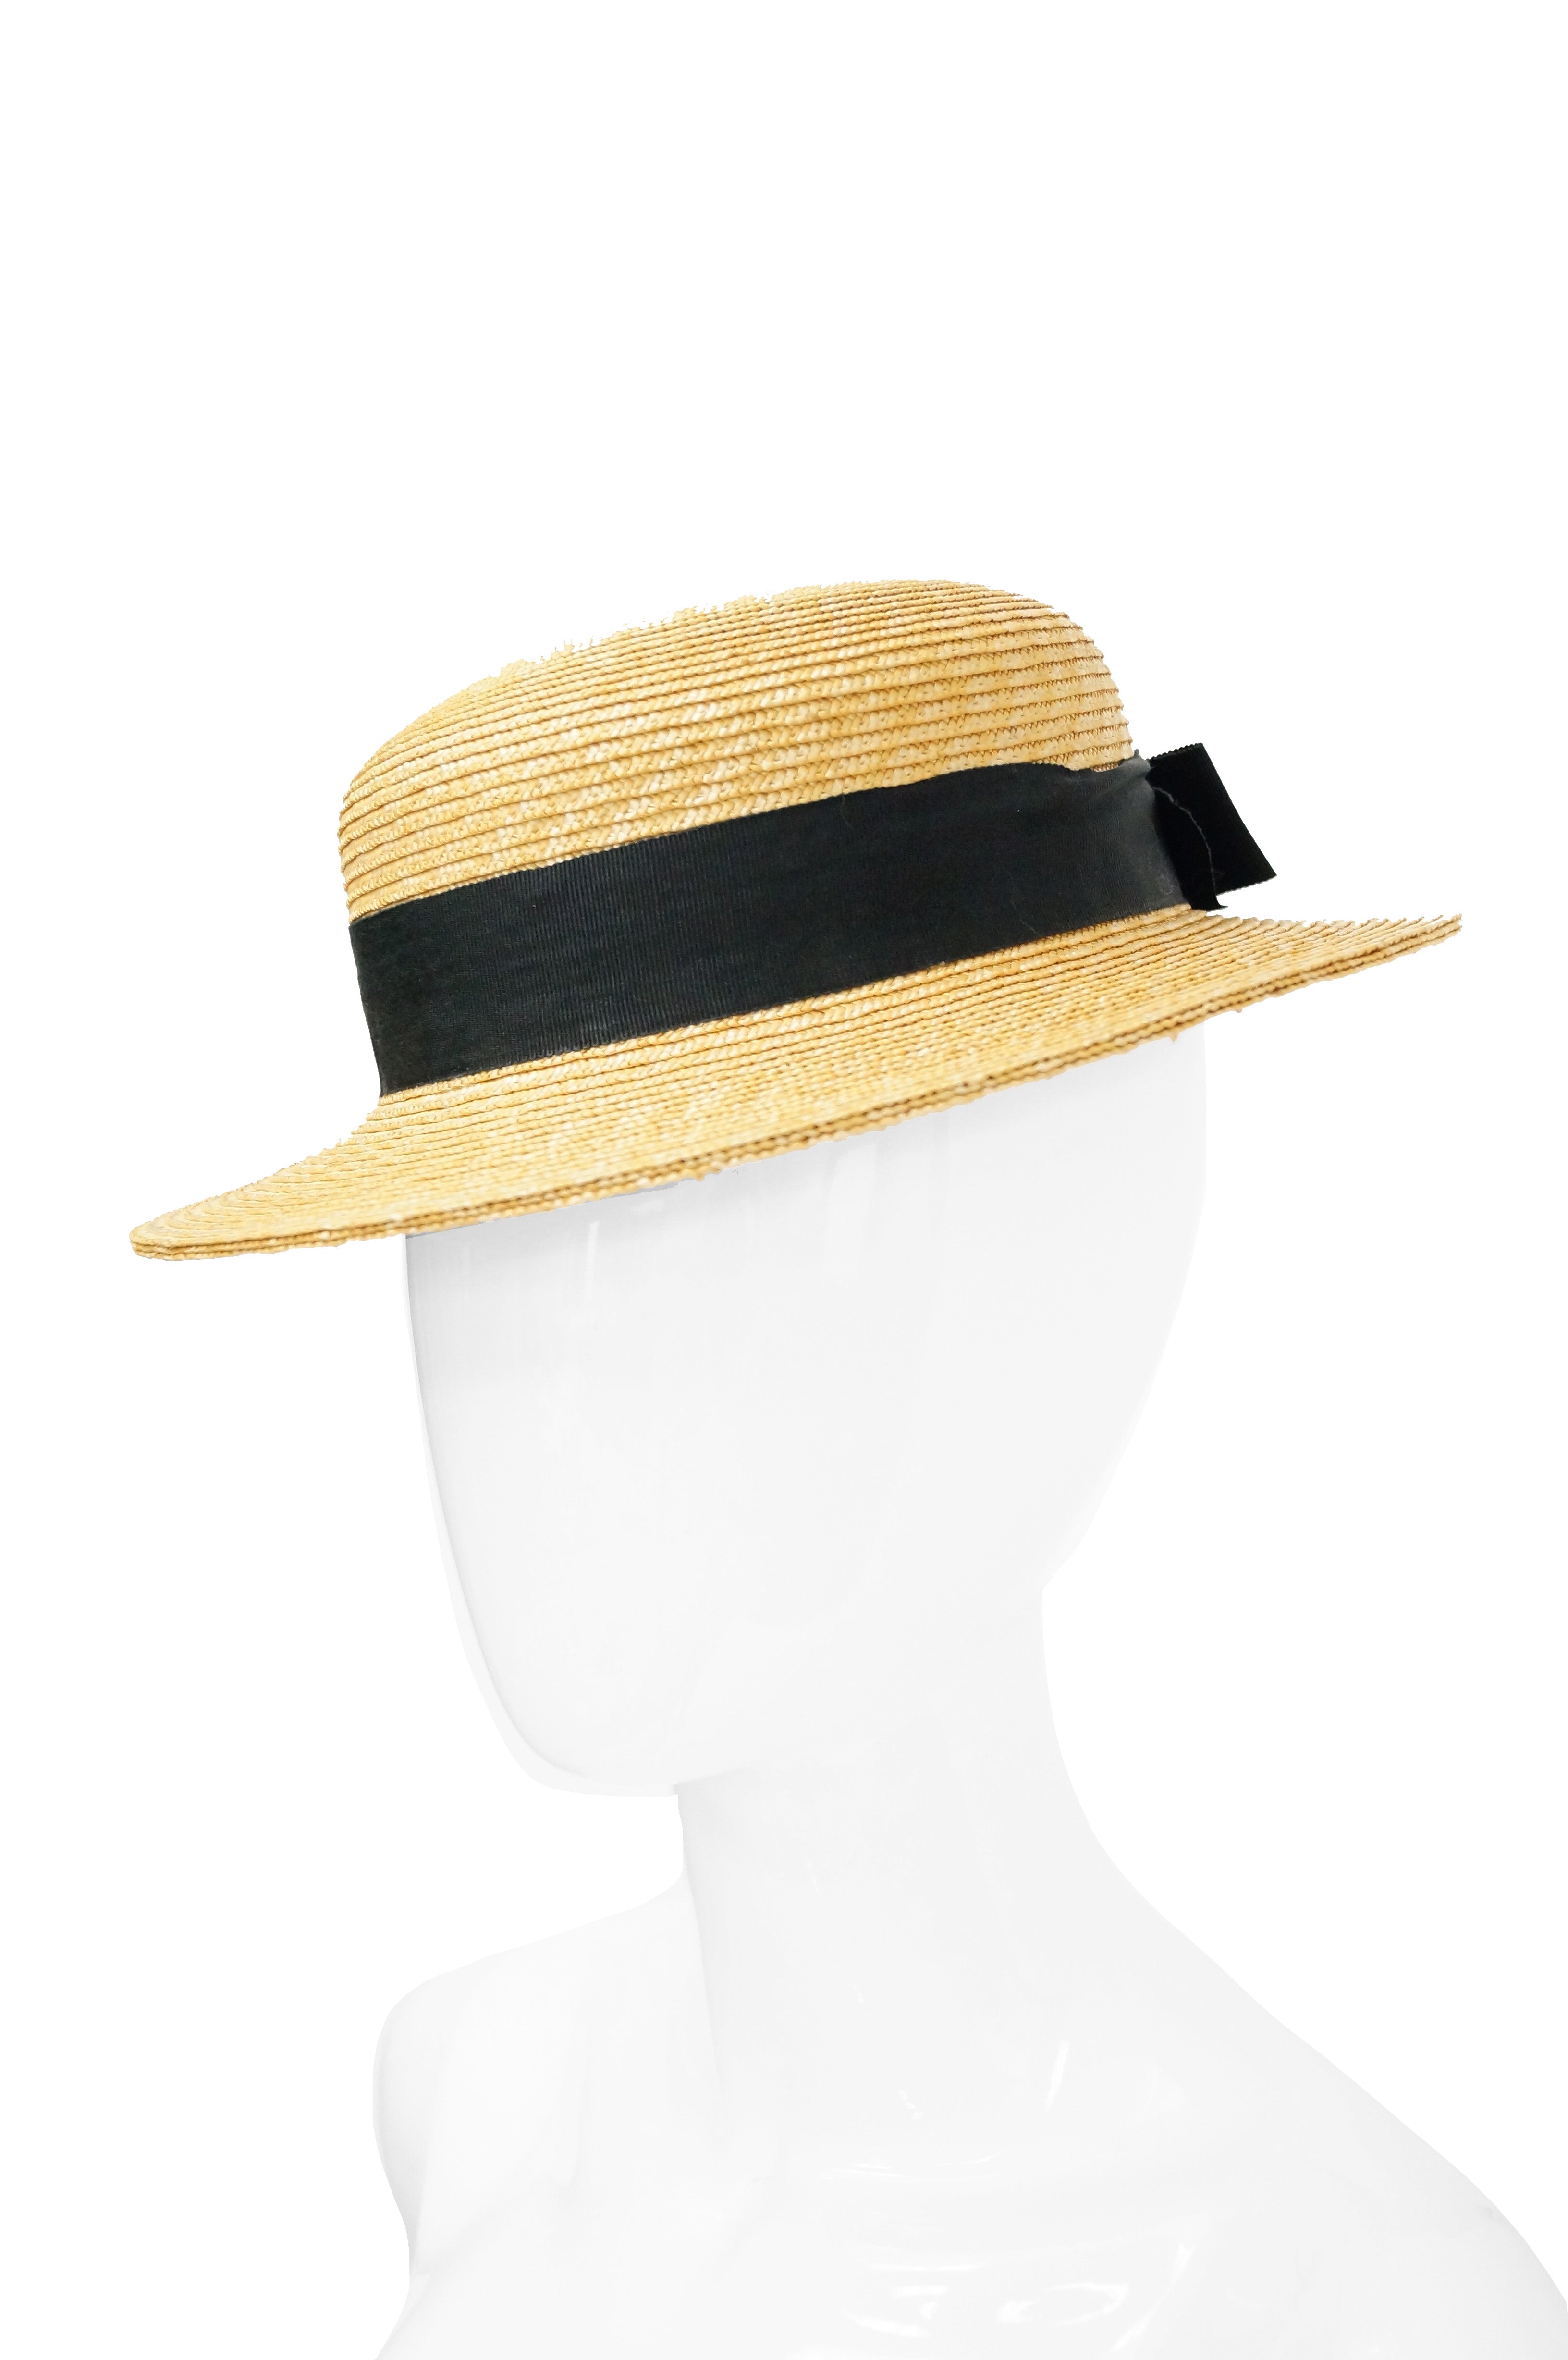 Buy Yves Saint Laurent hats on sale